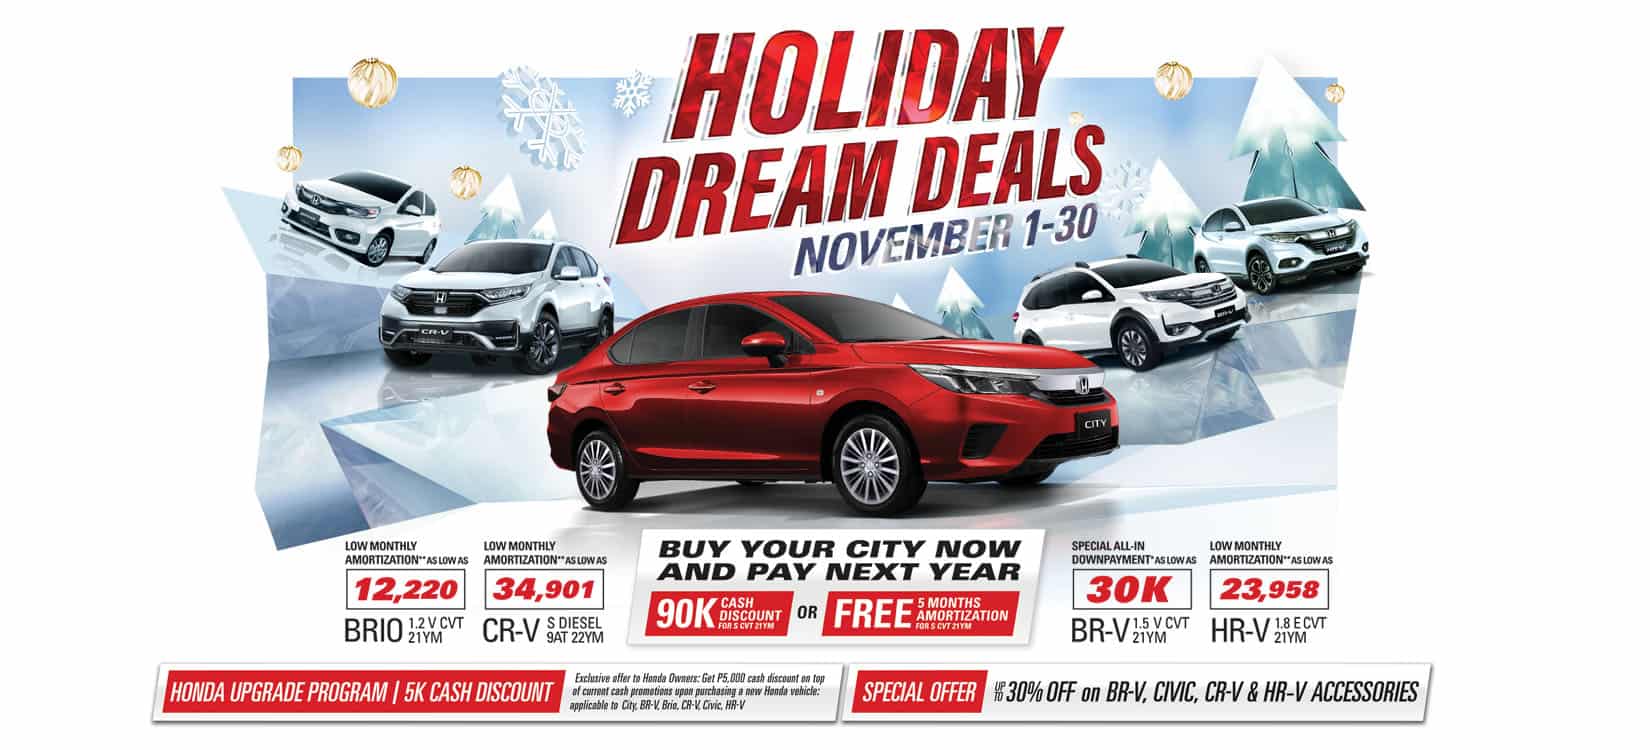 Celebrate the holiday season with Honda’s “Holiday Dream Deals”